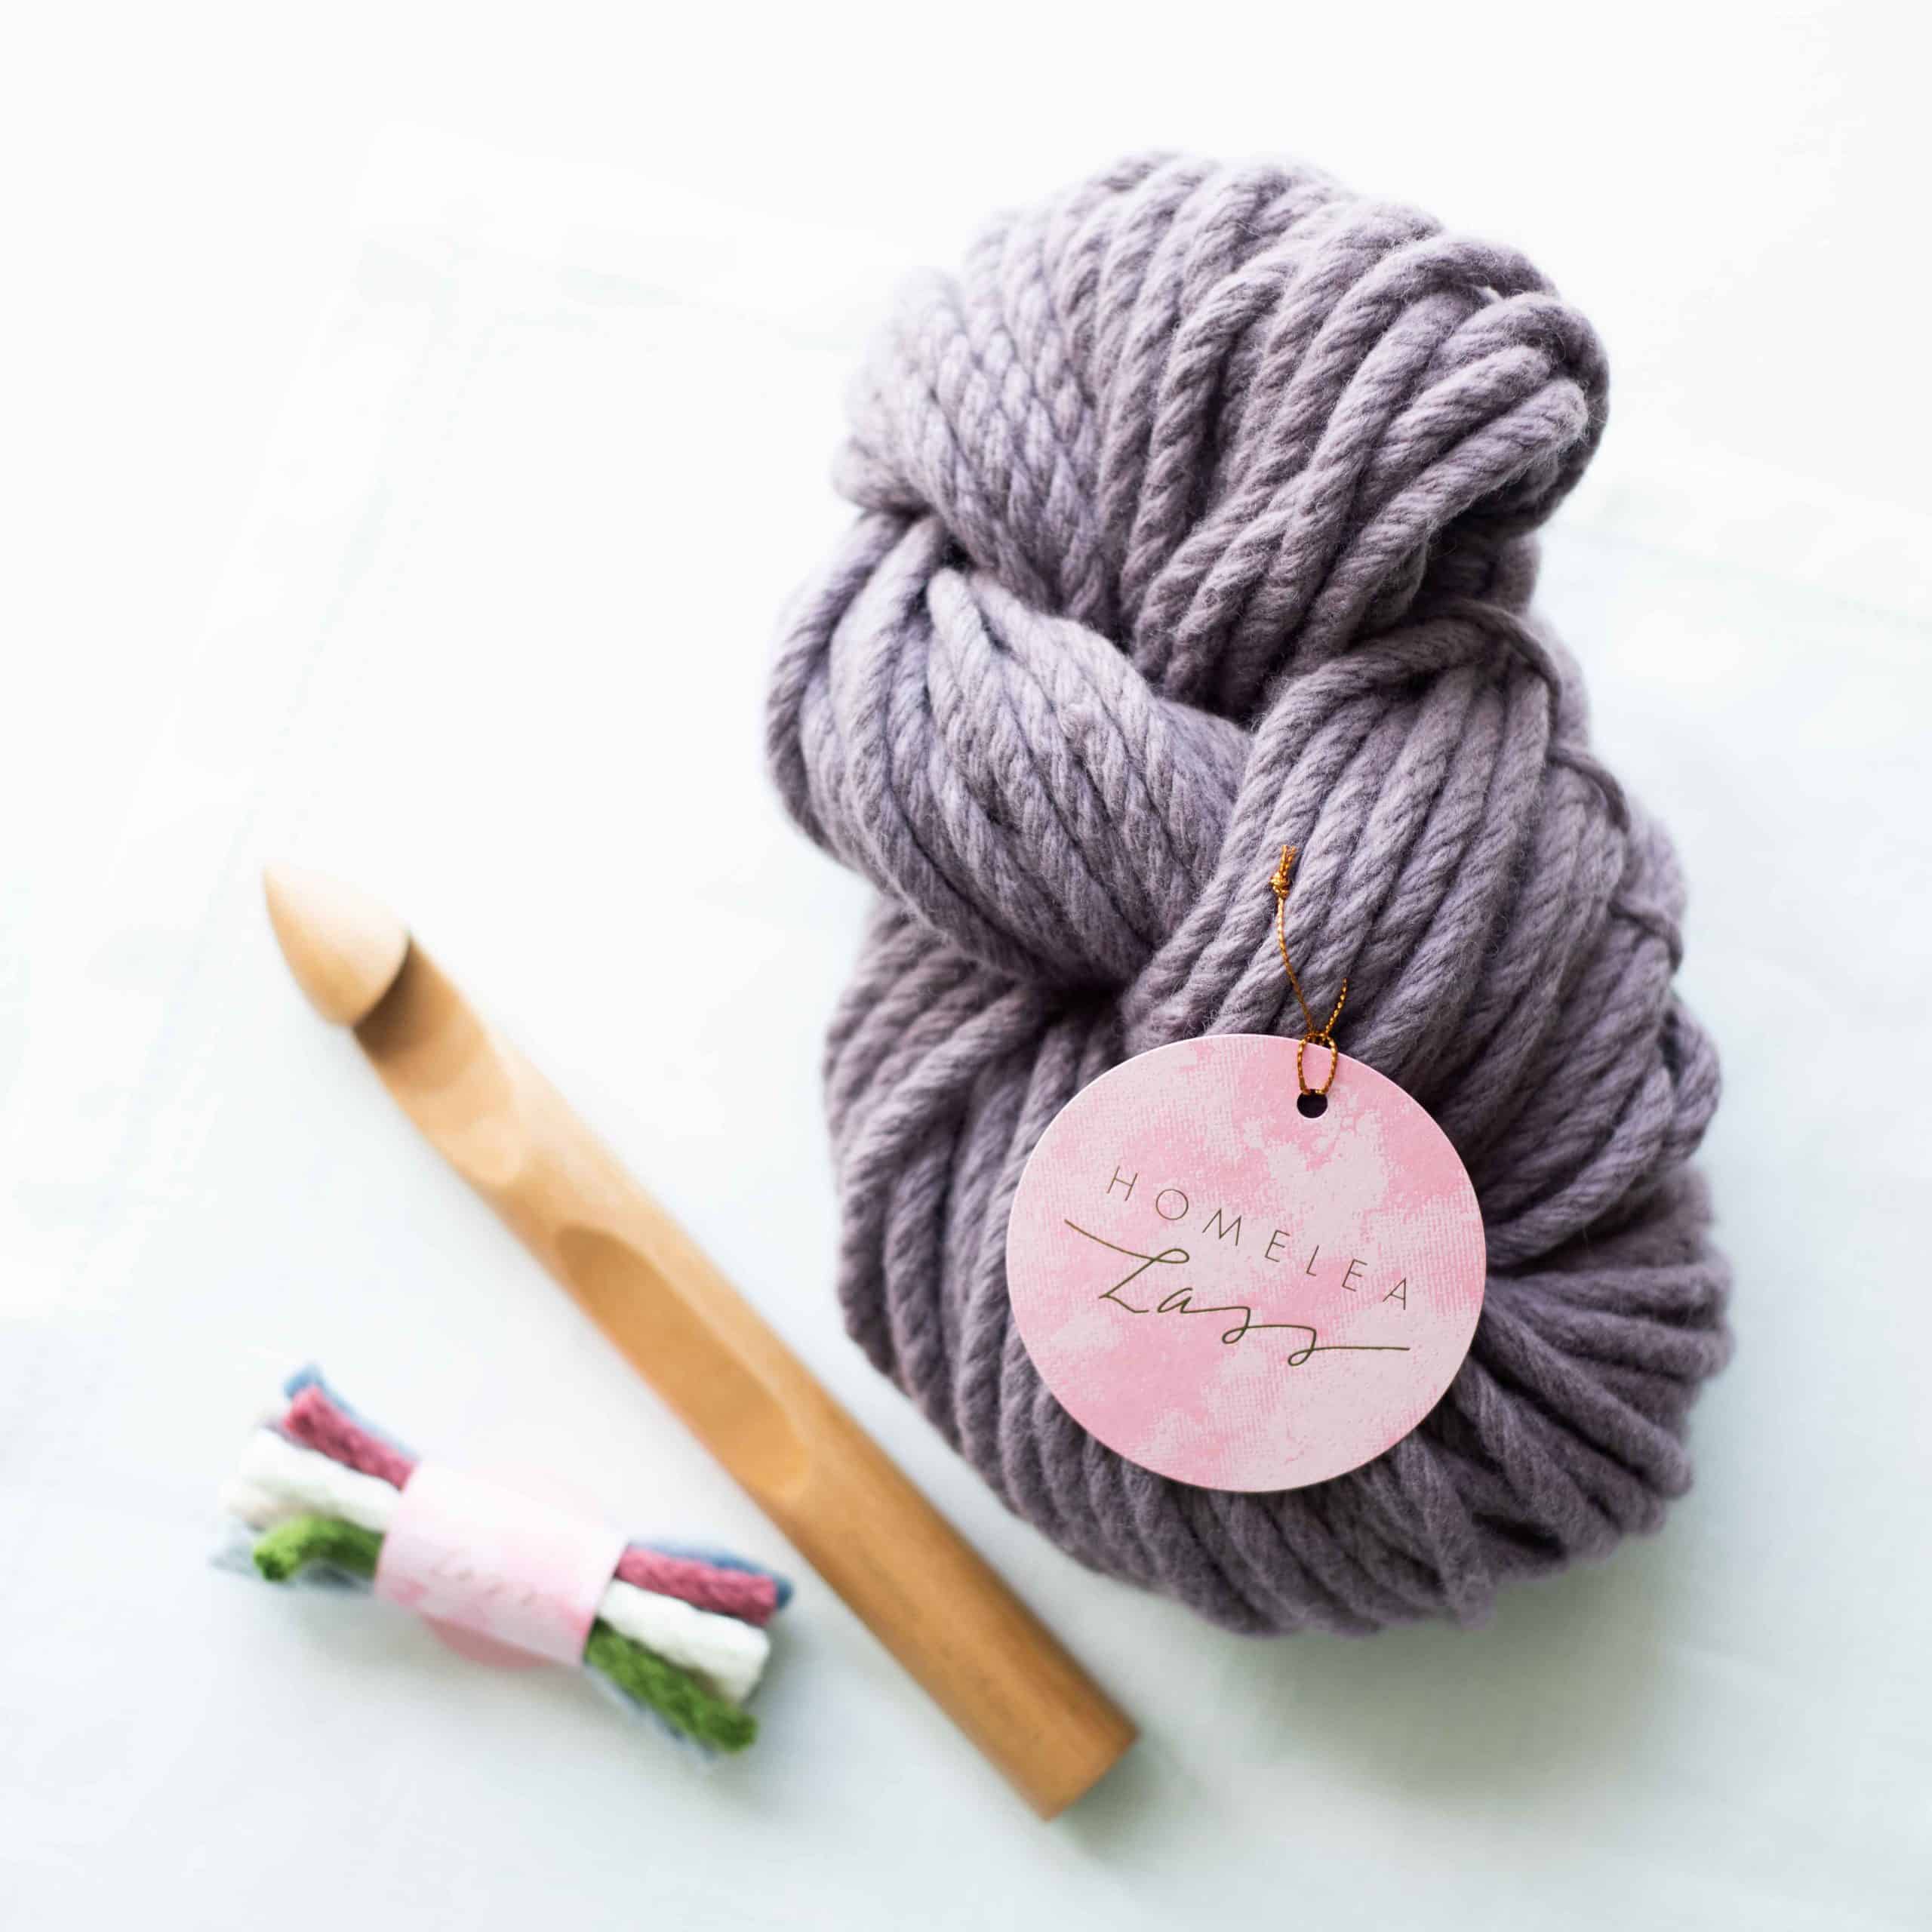 Chunky Crochet Starter Kit - free crochet hook & patterns